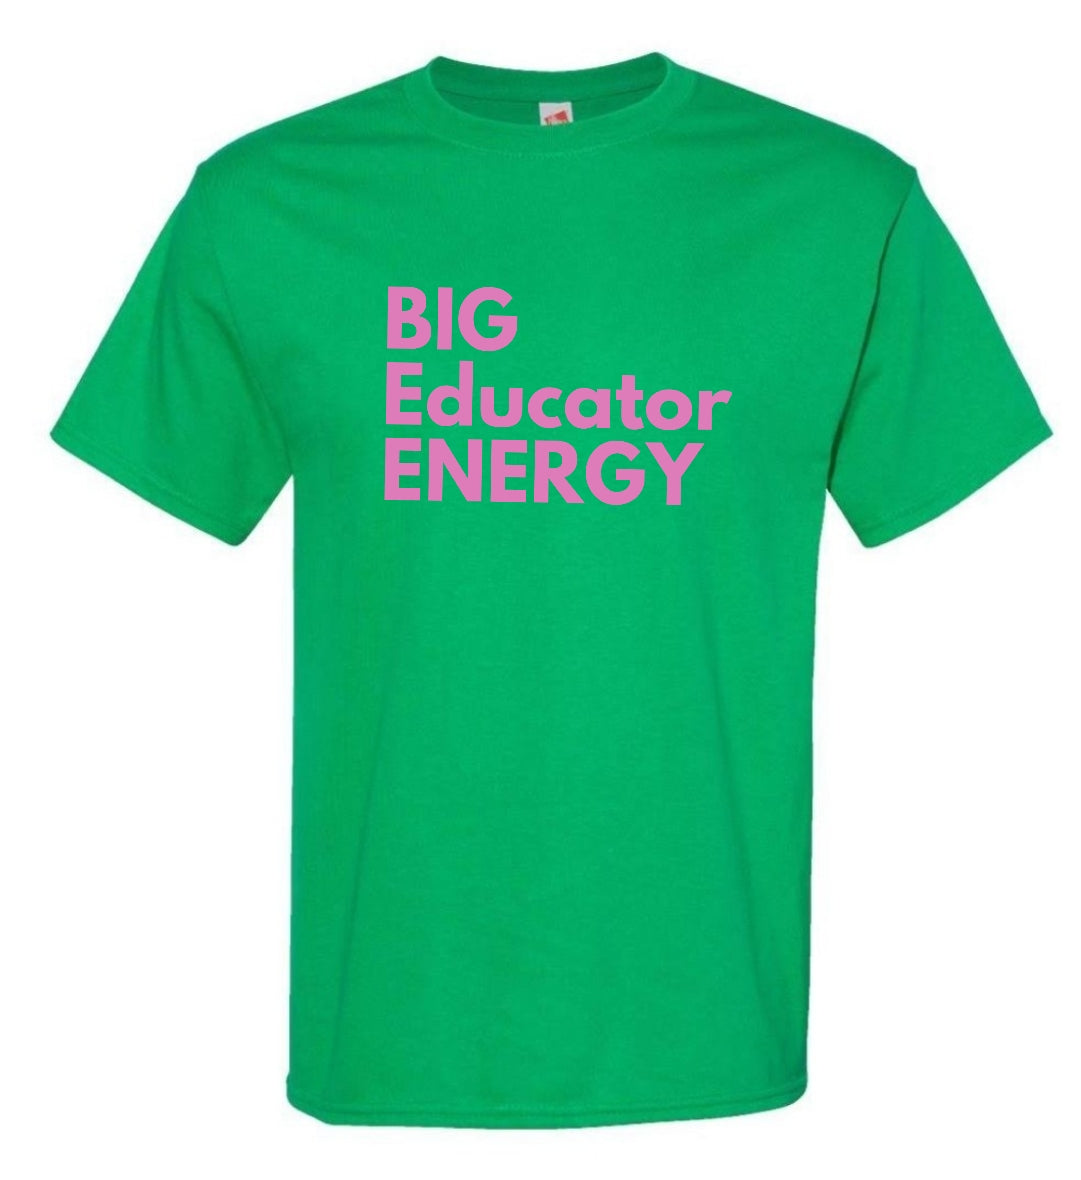 Big Educator Energy